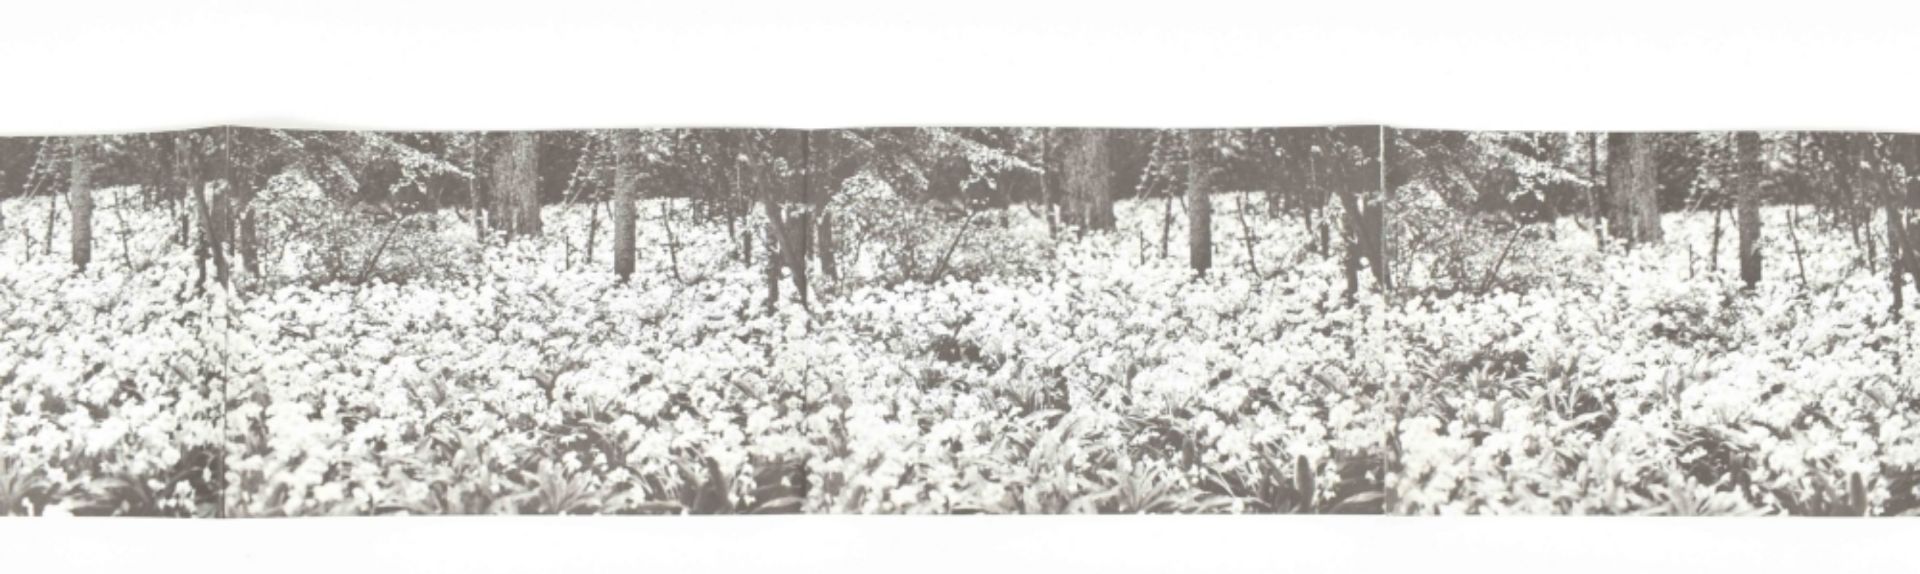 [s and 1970s] Dennis Oppenheim, Flower Arrangement for Bruce Nauman - Image 3 of 5